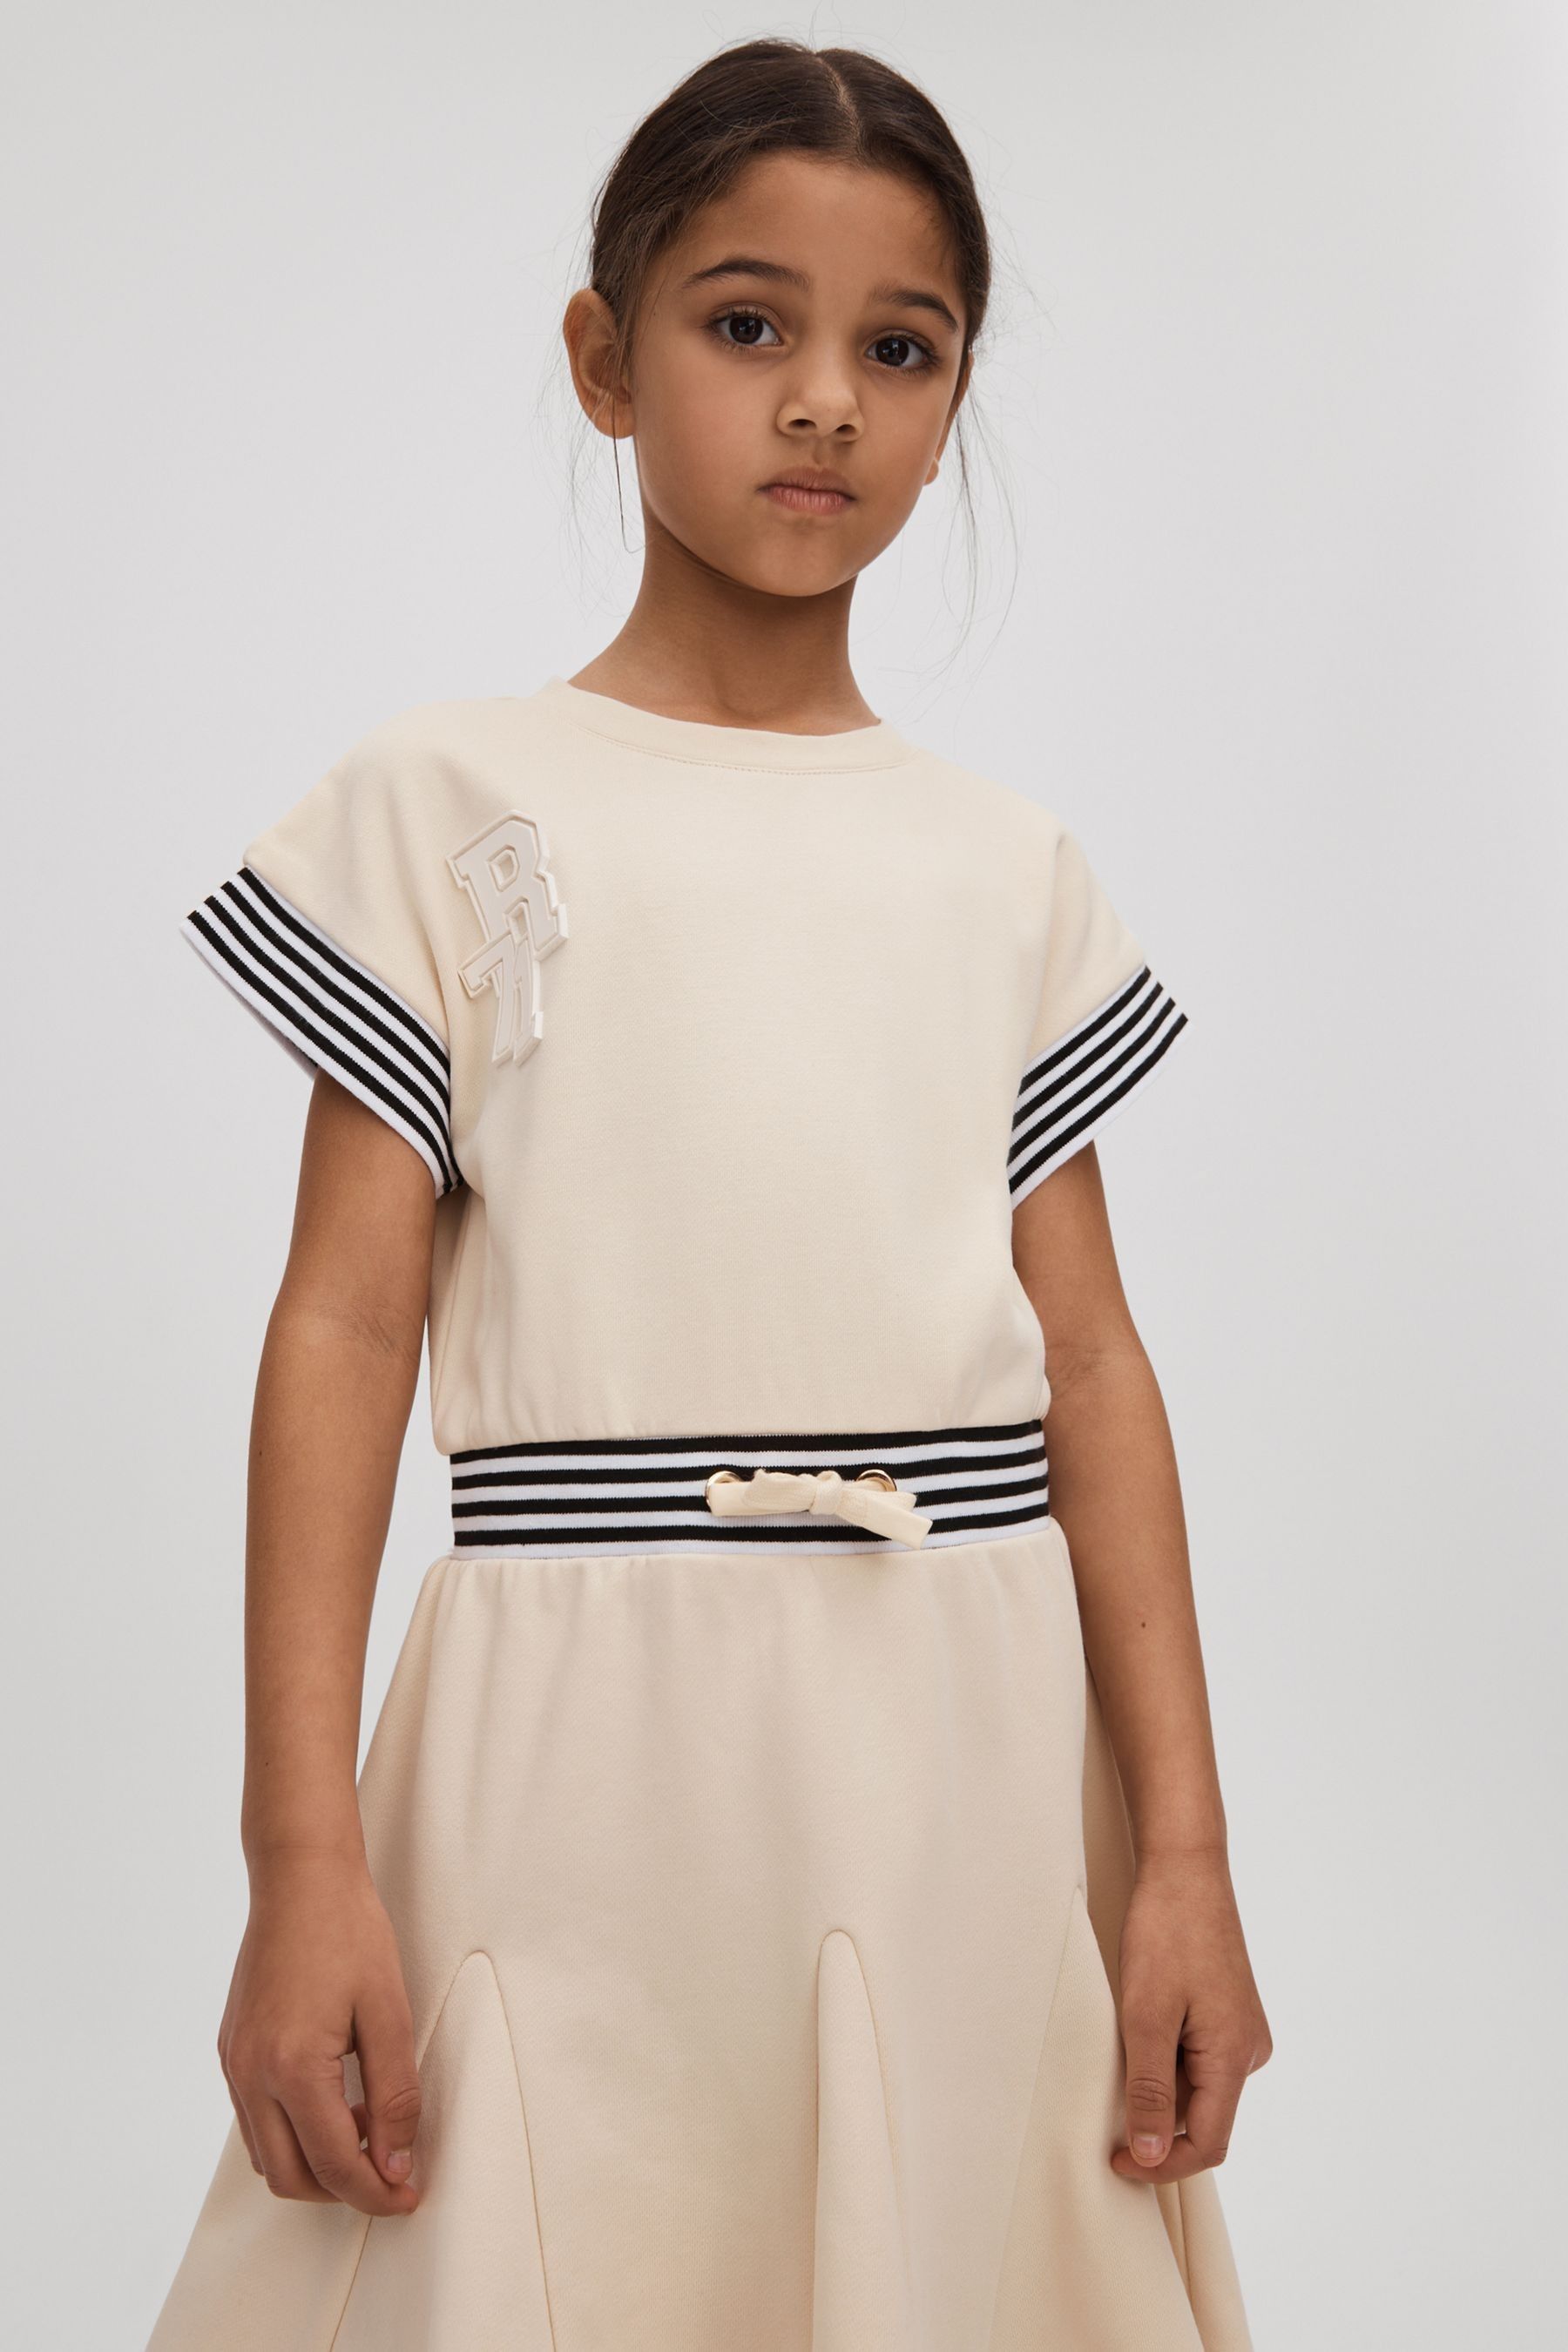 Reiss Kids' Milo - Ivory Senior Cotton Blend Logo Dress, Uk 12-13 Yrs